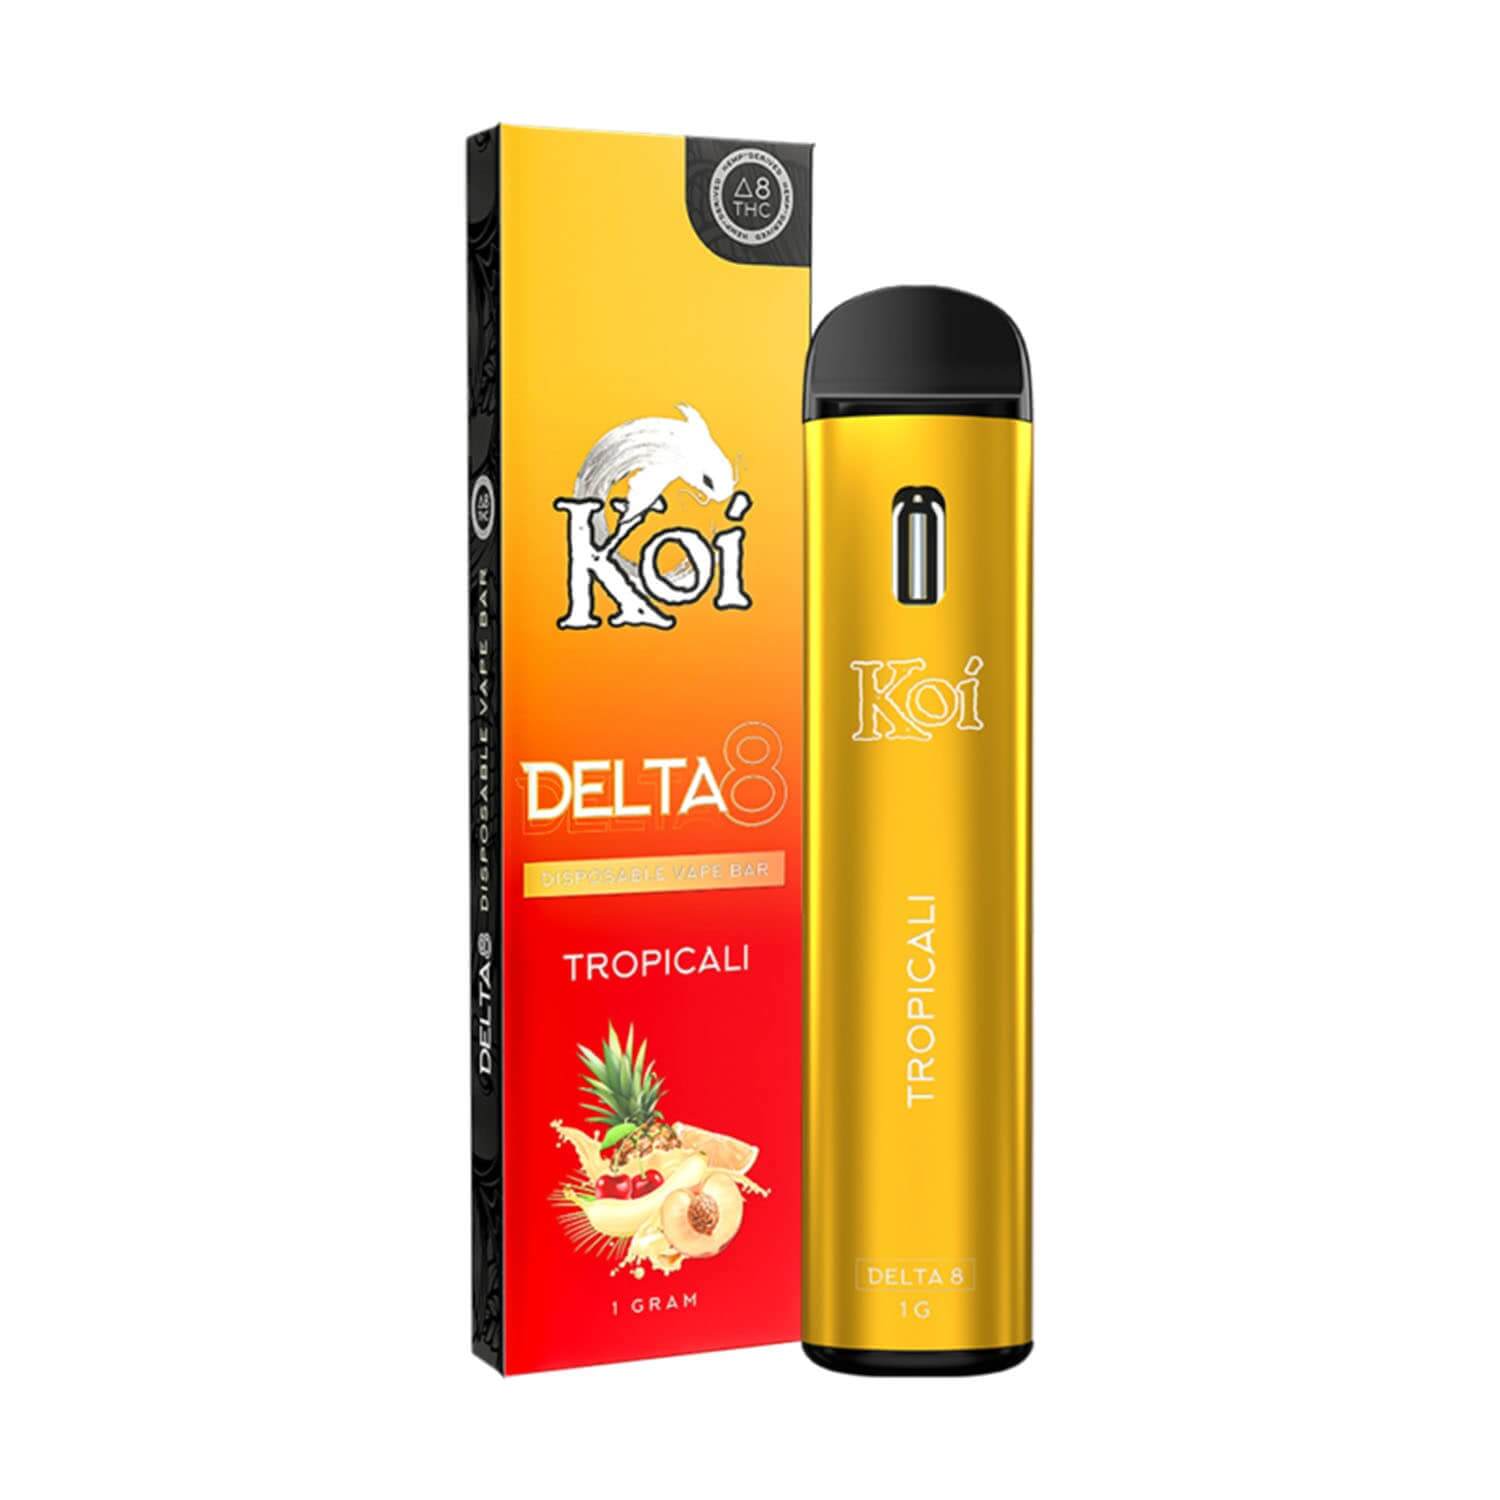 Koi Tropicali Delta 8 Disposable Vape Bar (1g) Best Price